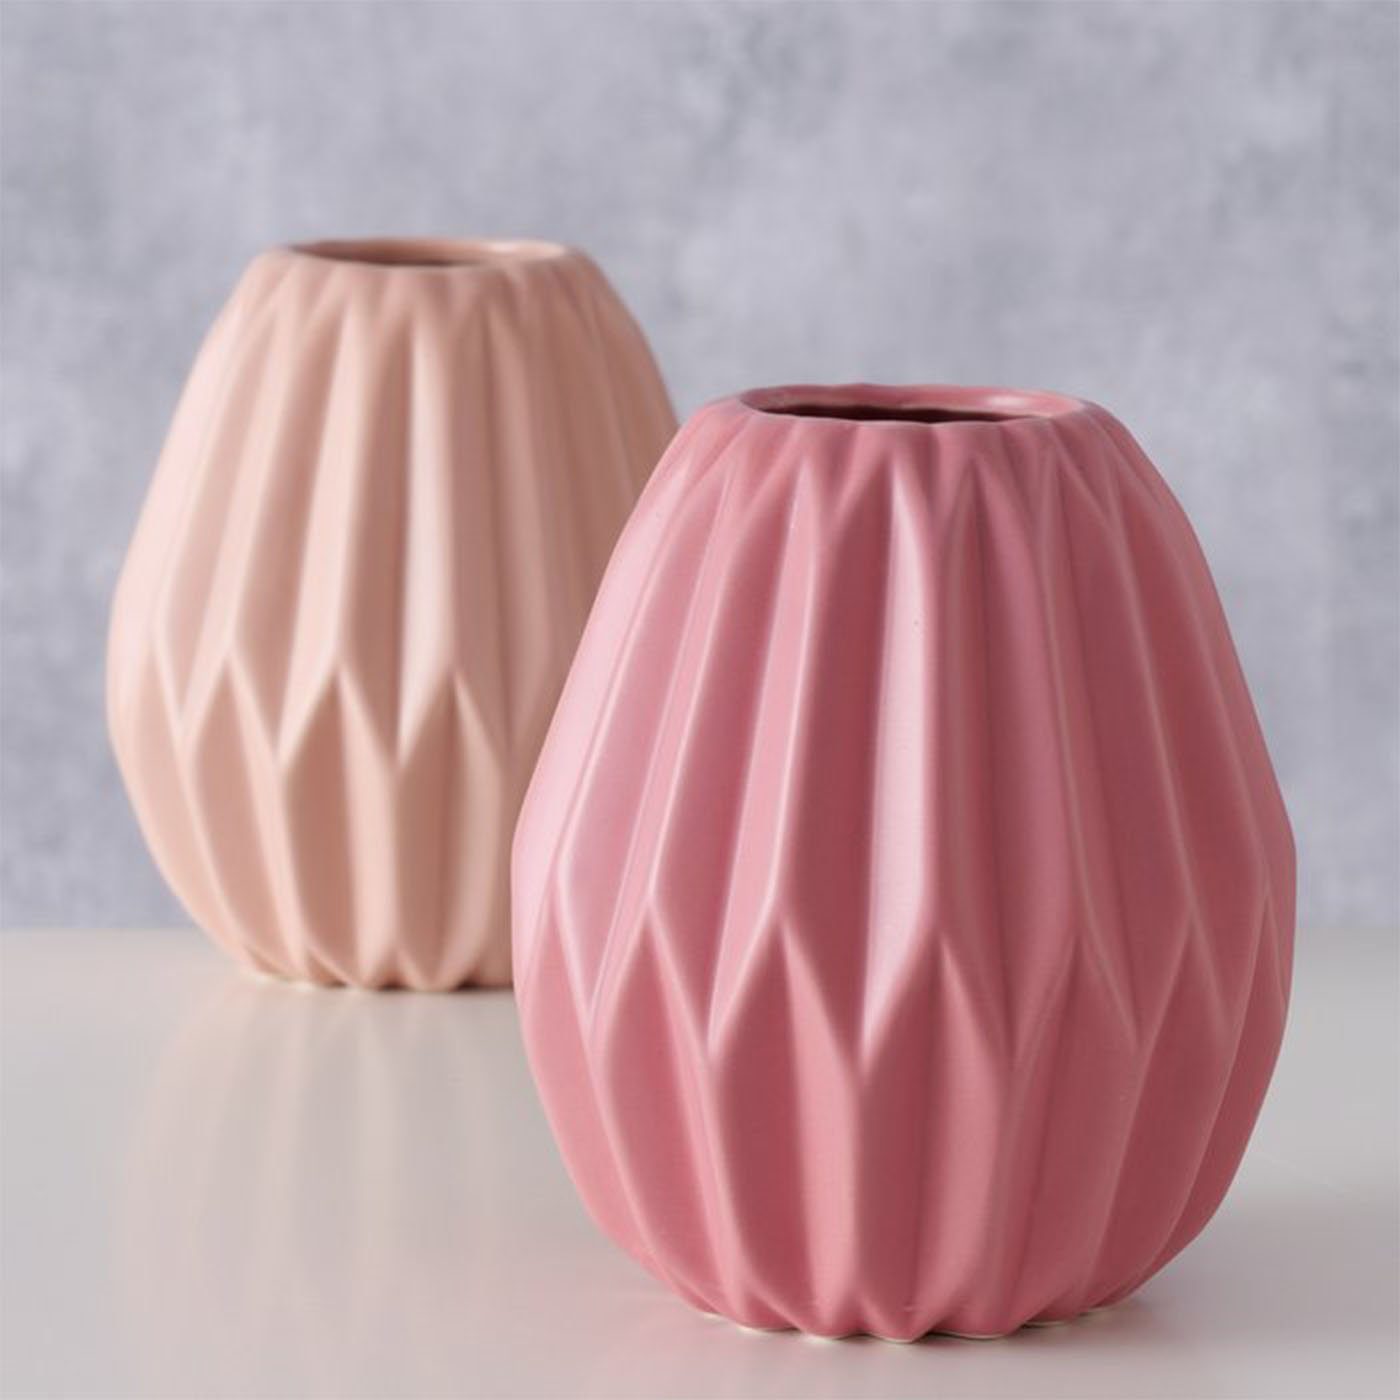 Design Tischvase Vase Set Matt 2er Gemometrisches Deko Keramik aus BOLTZE Rosa